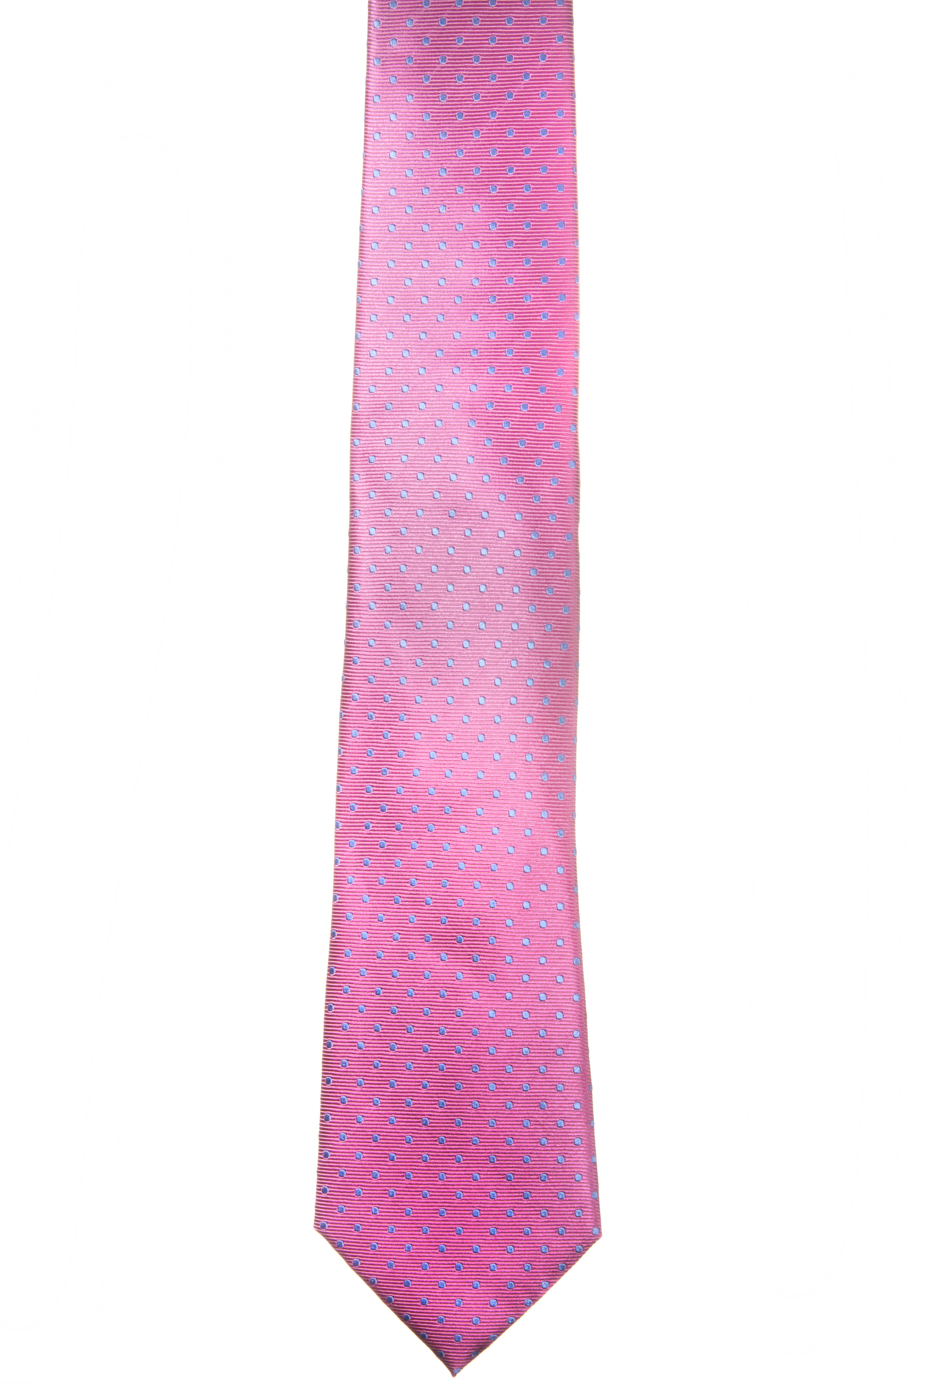 Corbata rosa topos azules